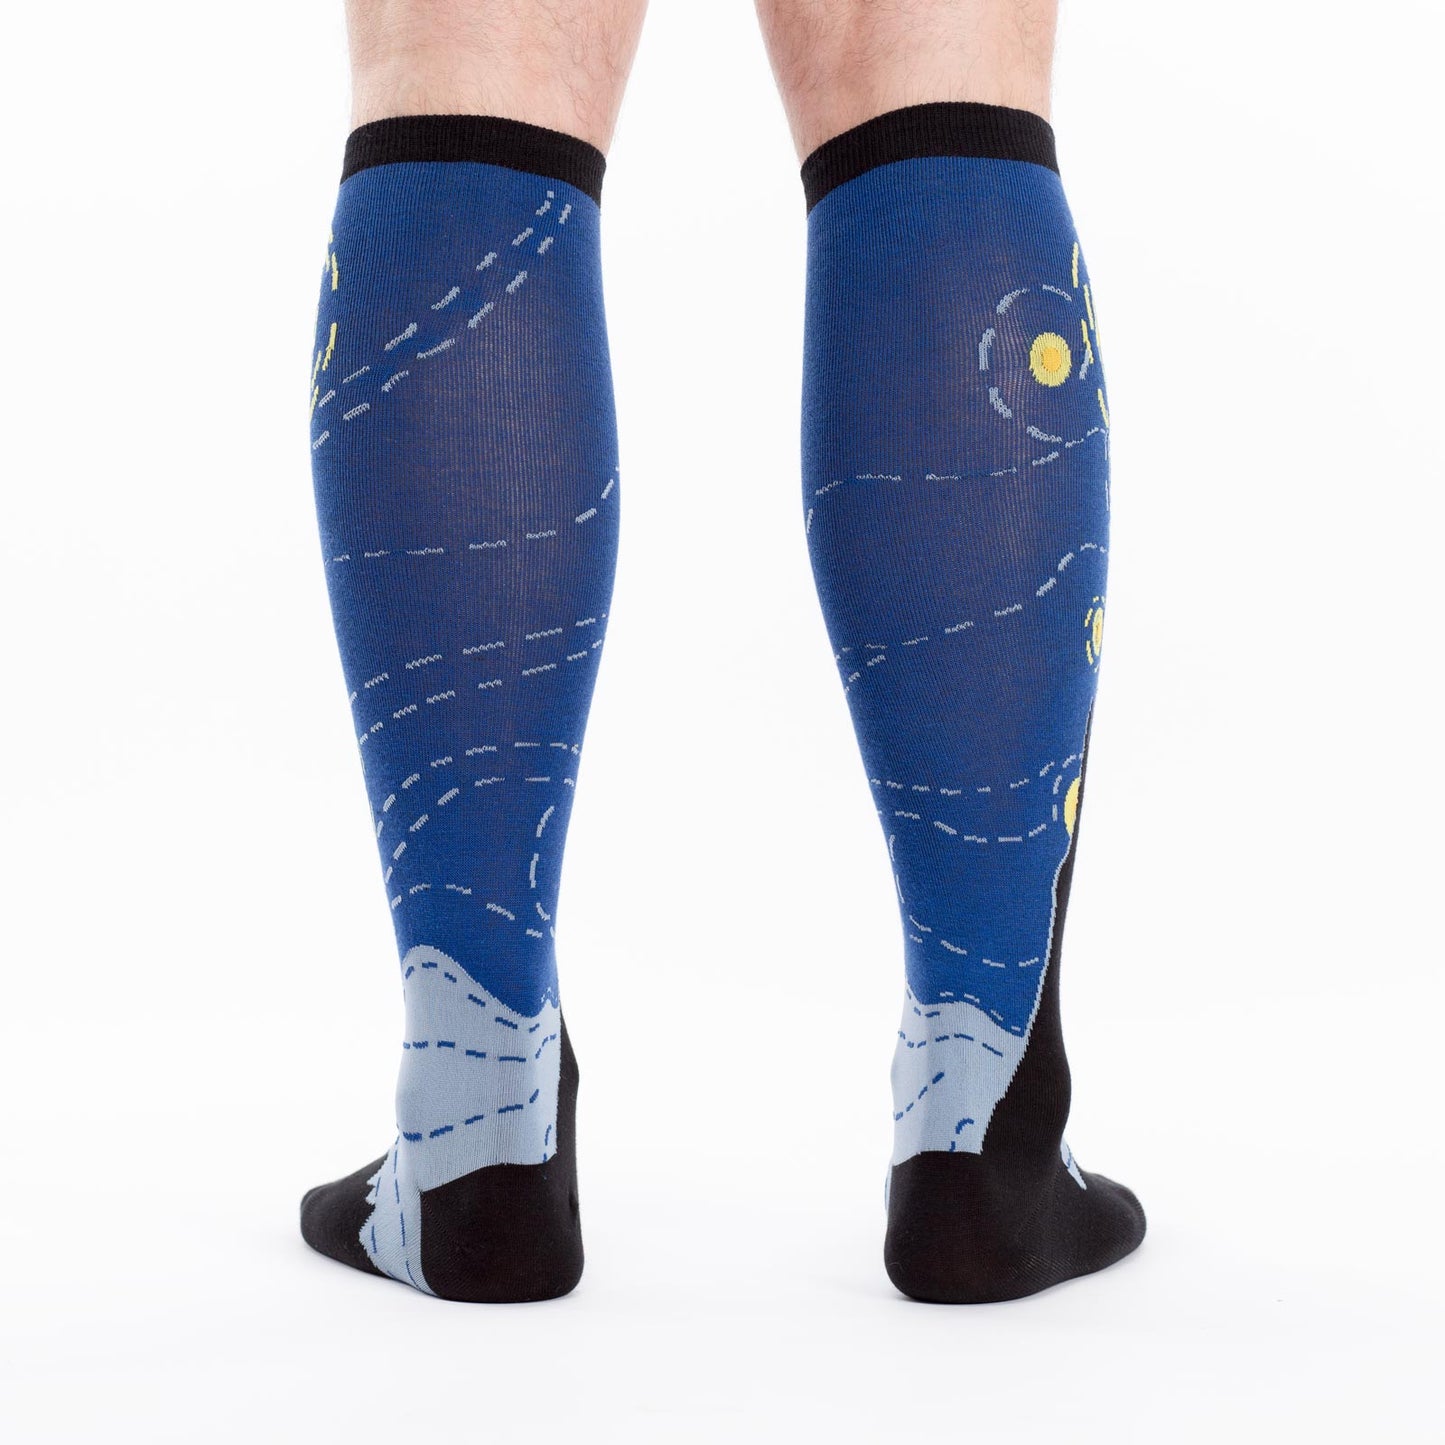 Sock It To Me STRETCH-IT Unisex Knee High Socks - Starry Night